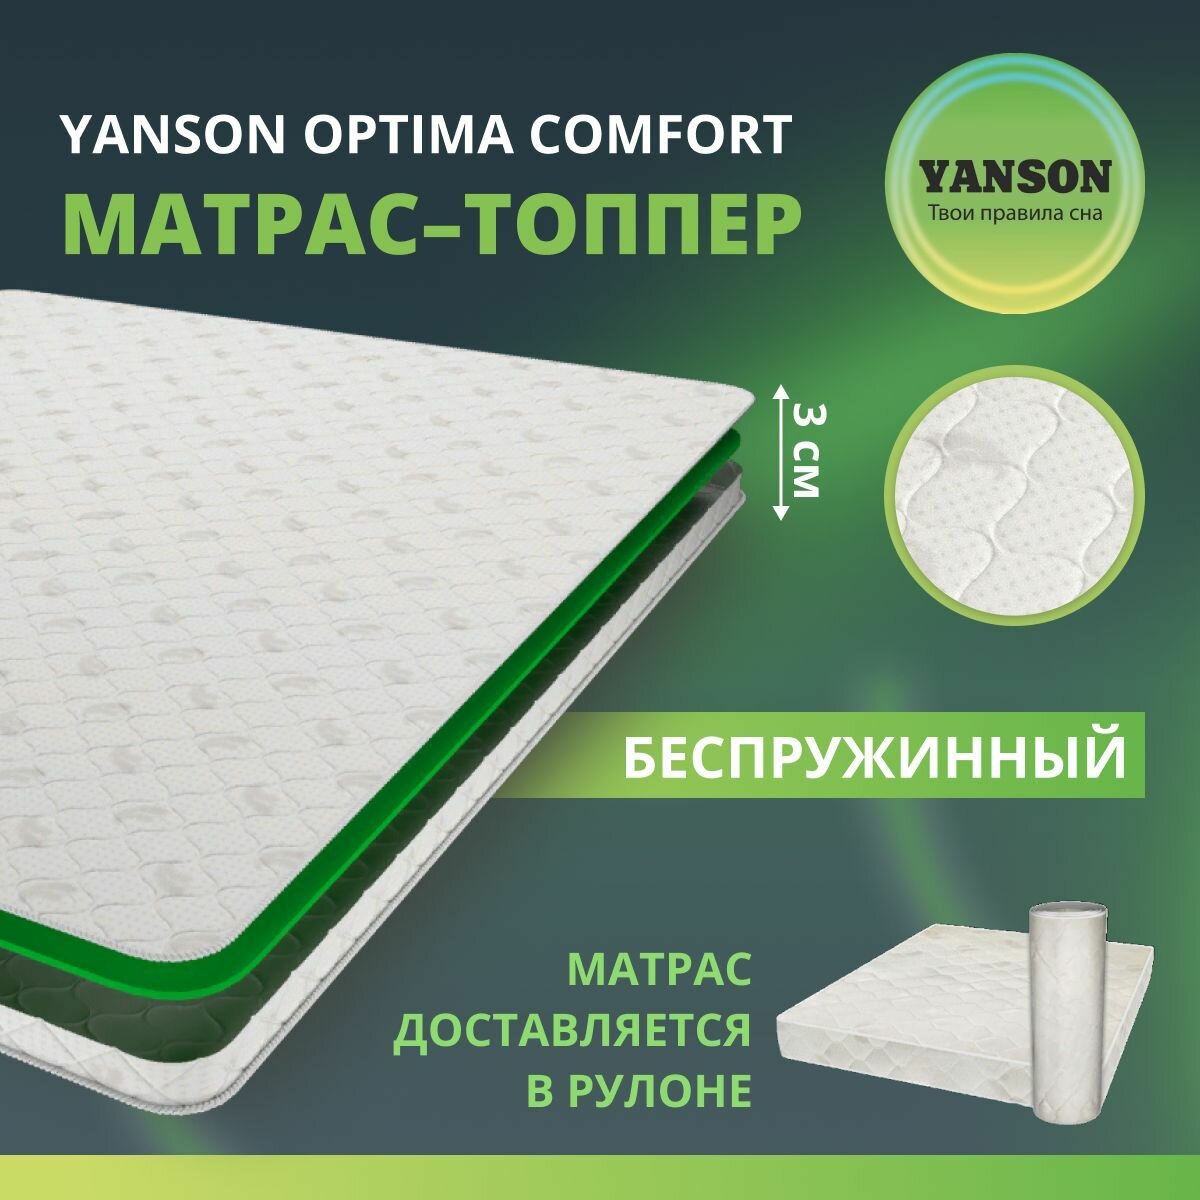 YANSON Optima Comfort 60-200